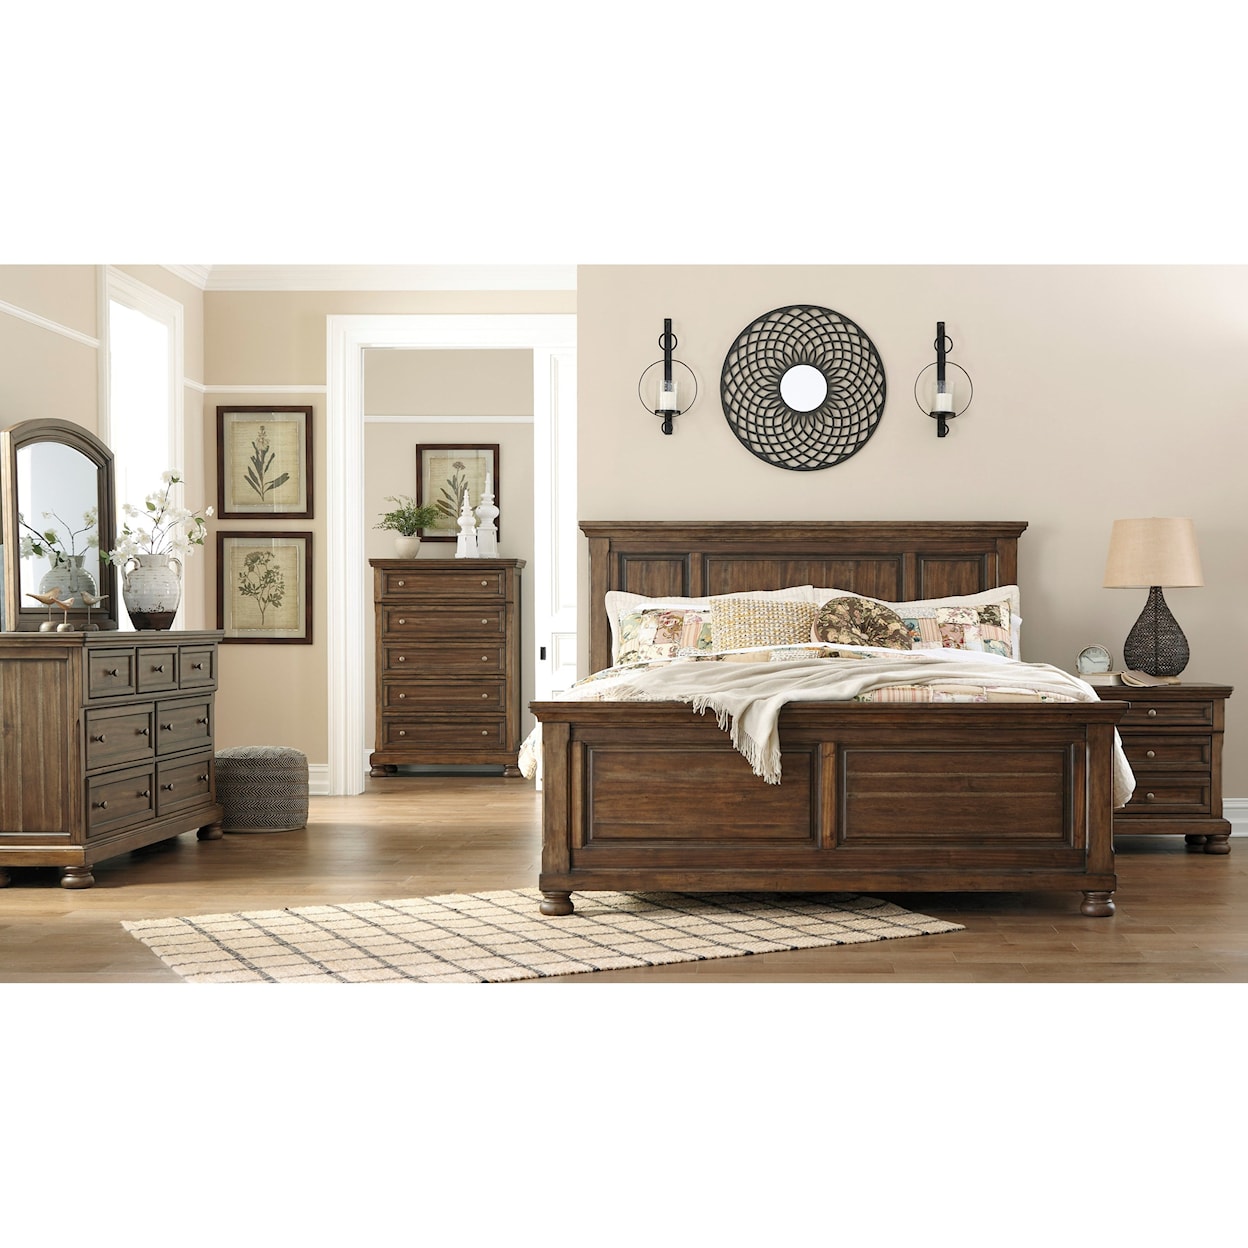 Ashley Furniture Signature Design Flynnter King Bedroom Group